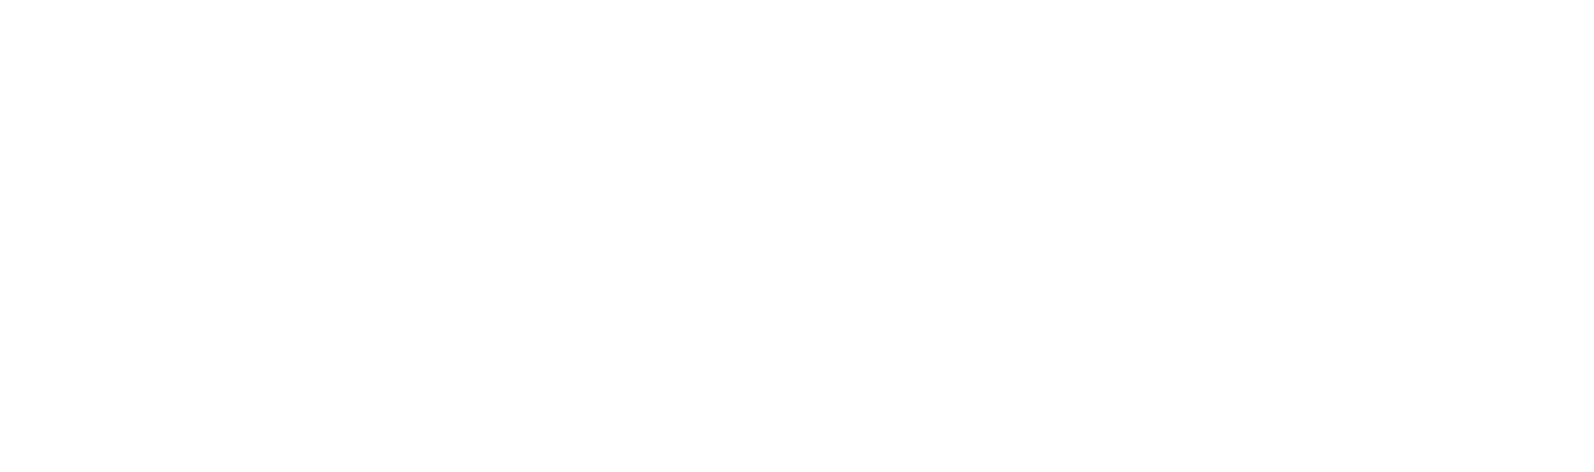 Easyworks - Distribuidor oficial SOLIDWORKS